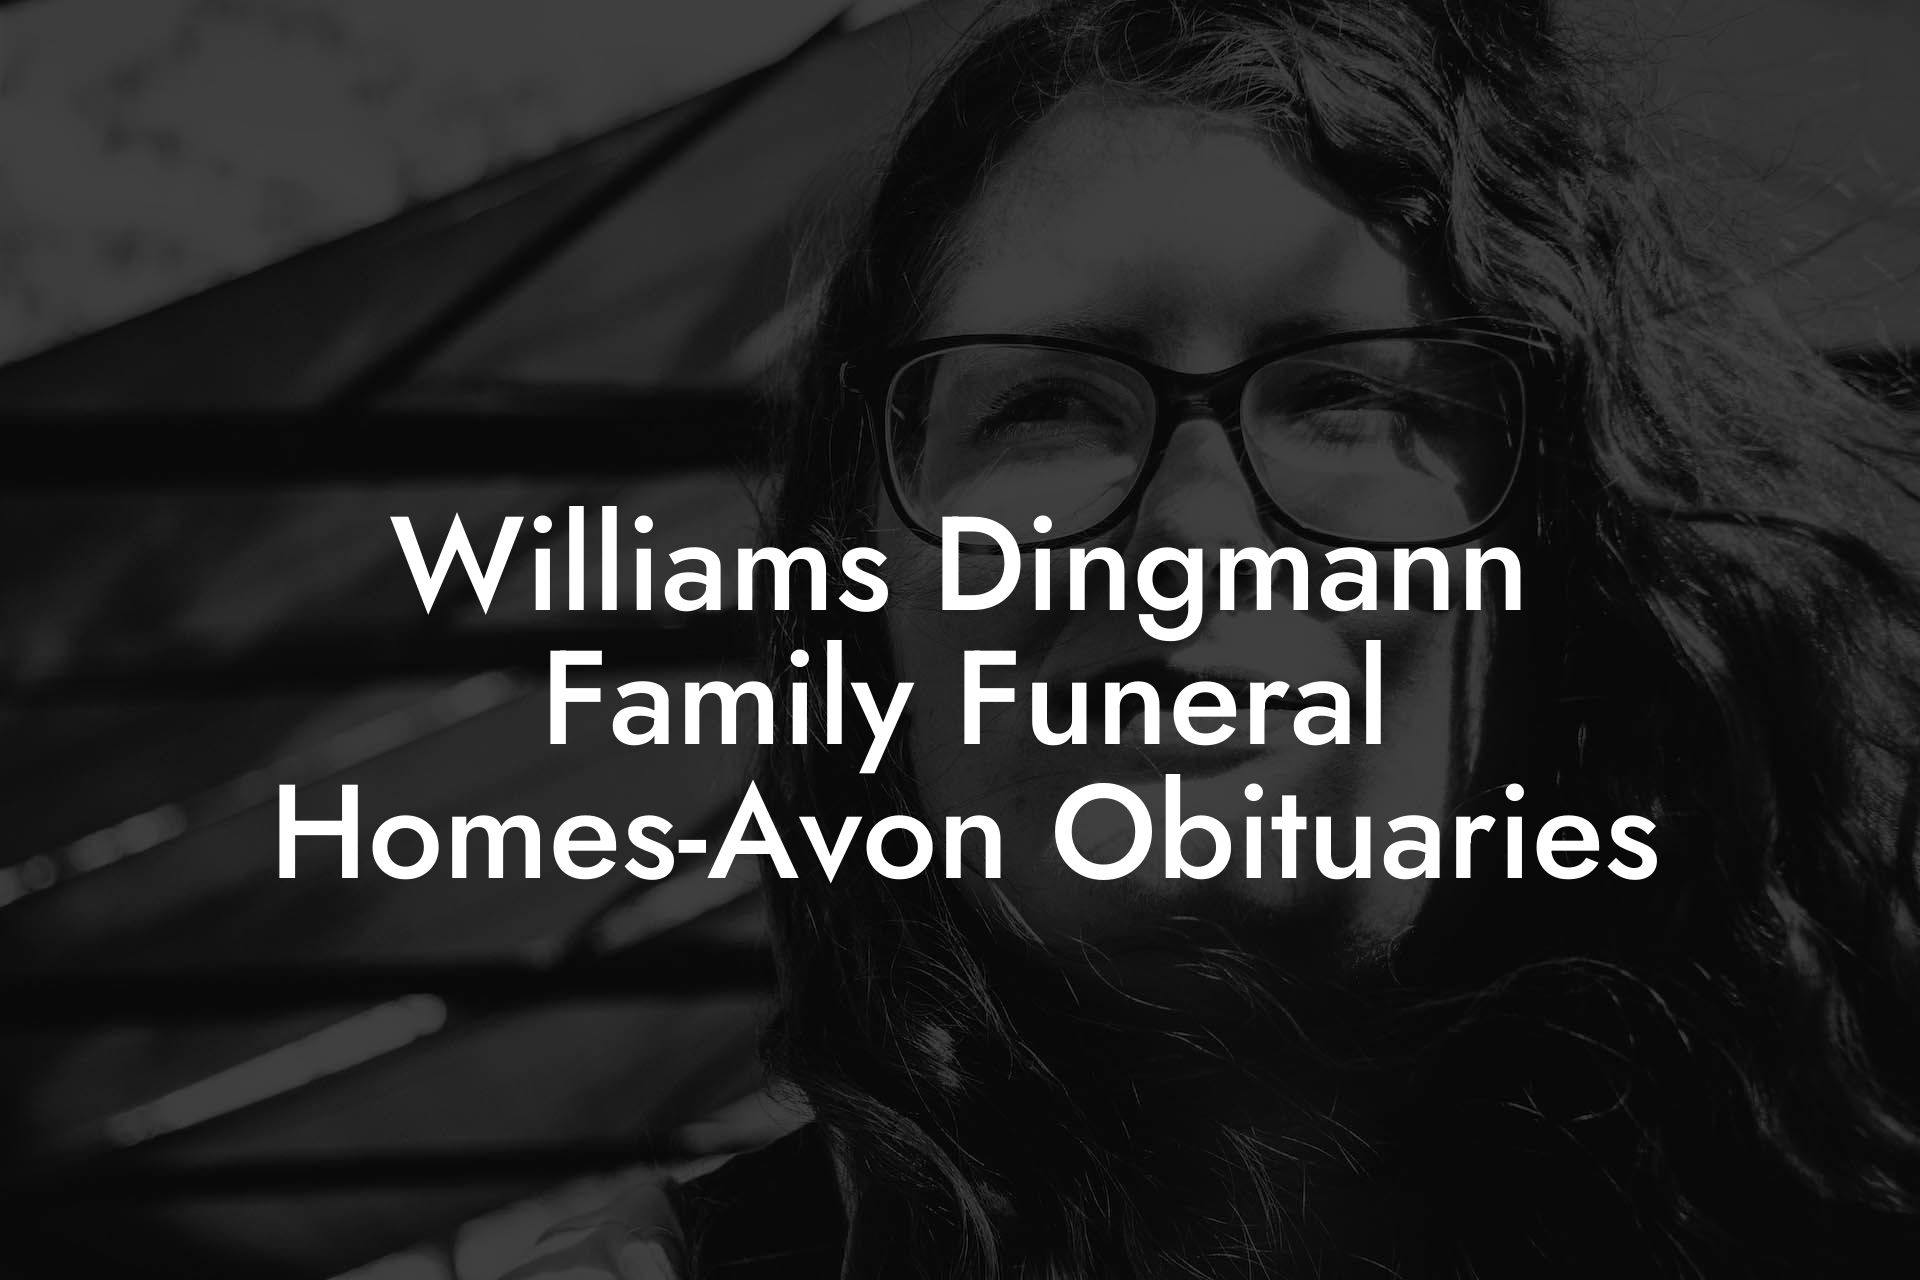 Williams Dingmann Family Funeral Homes-Avon Obituaries